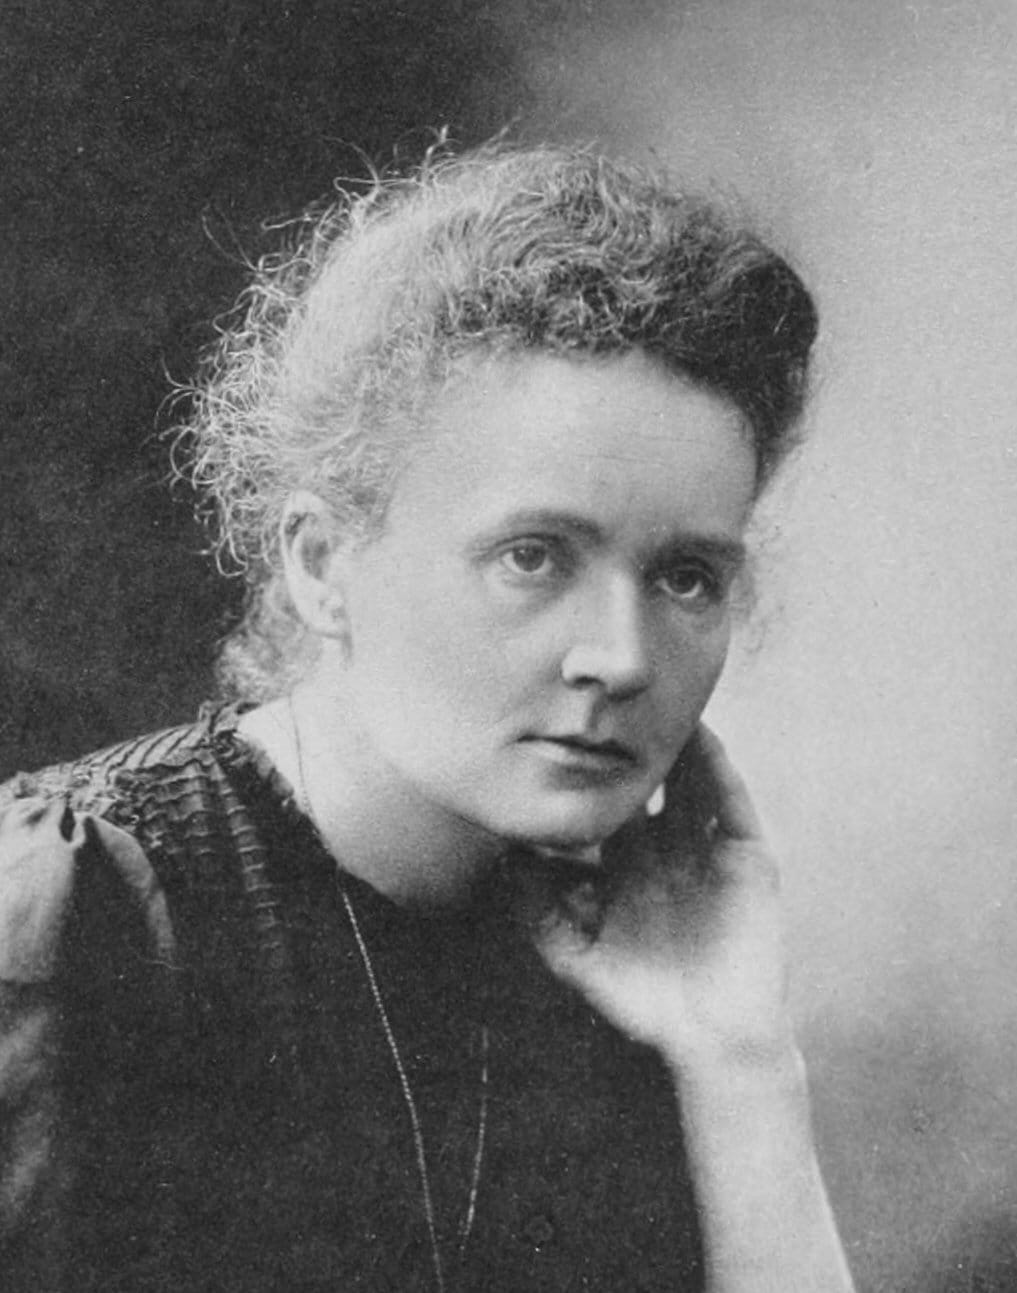 Spotlight on: Marie Curie